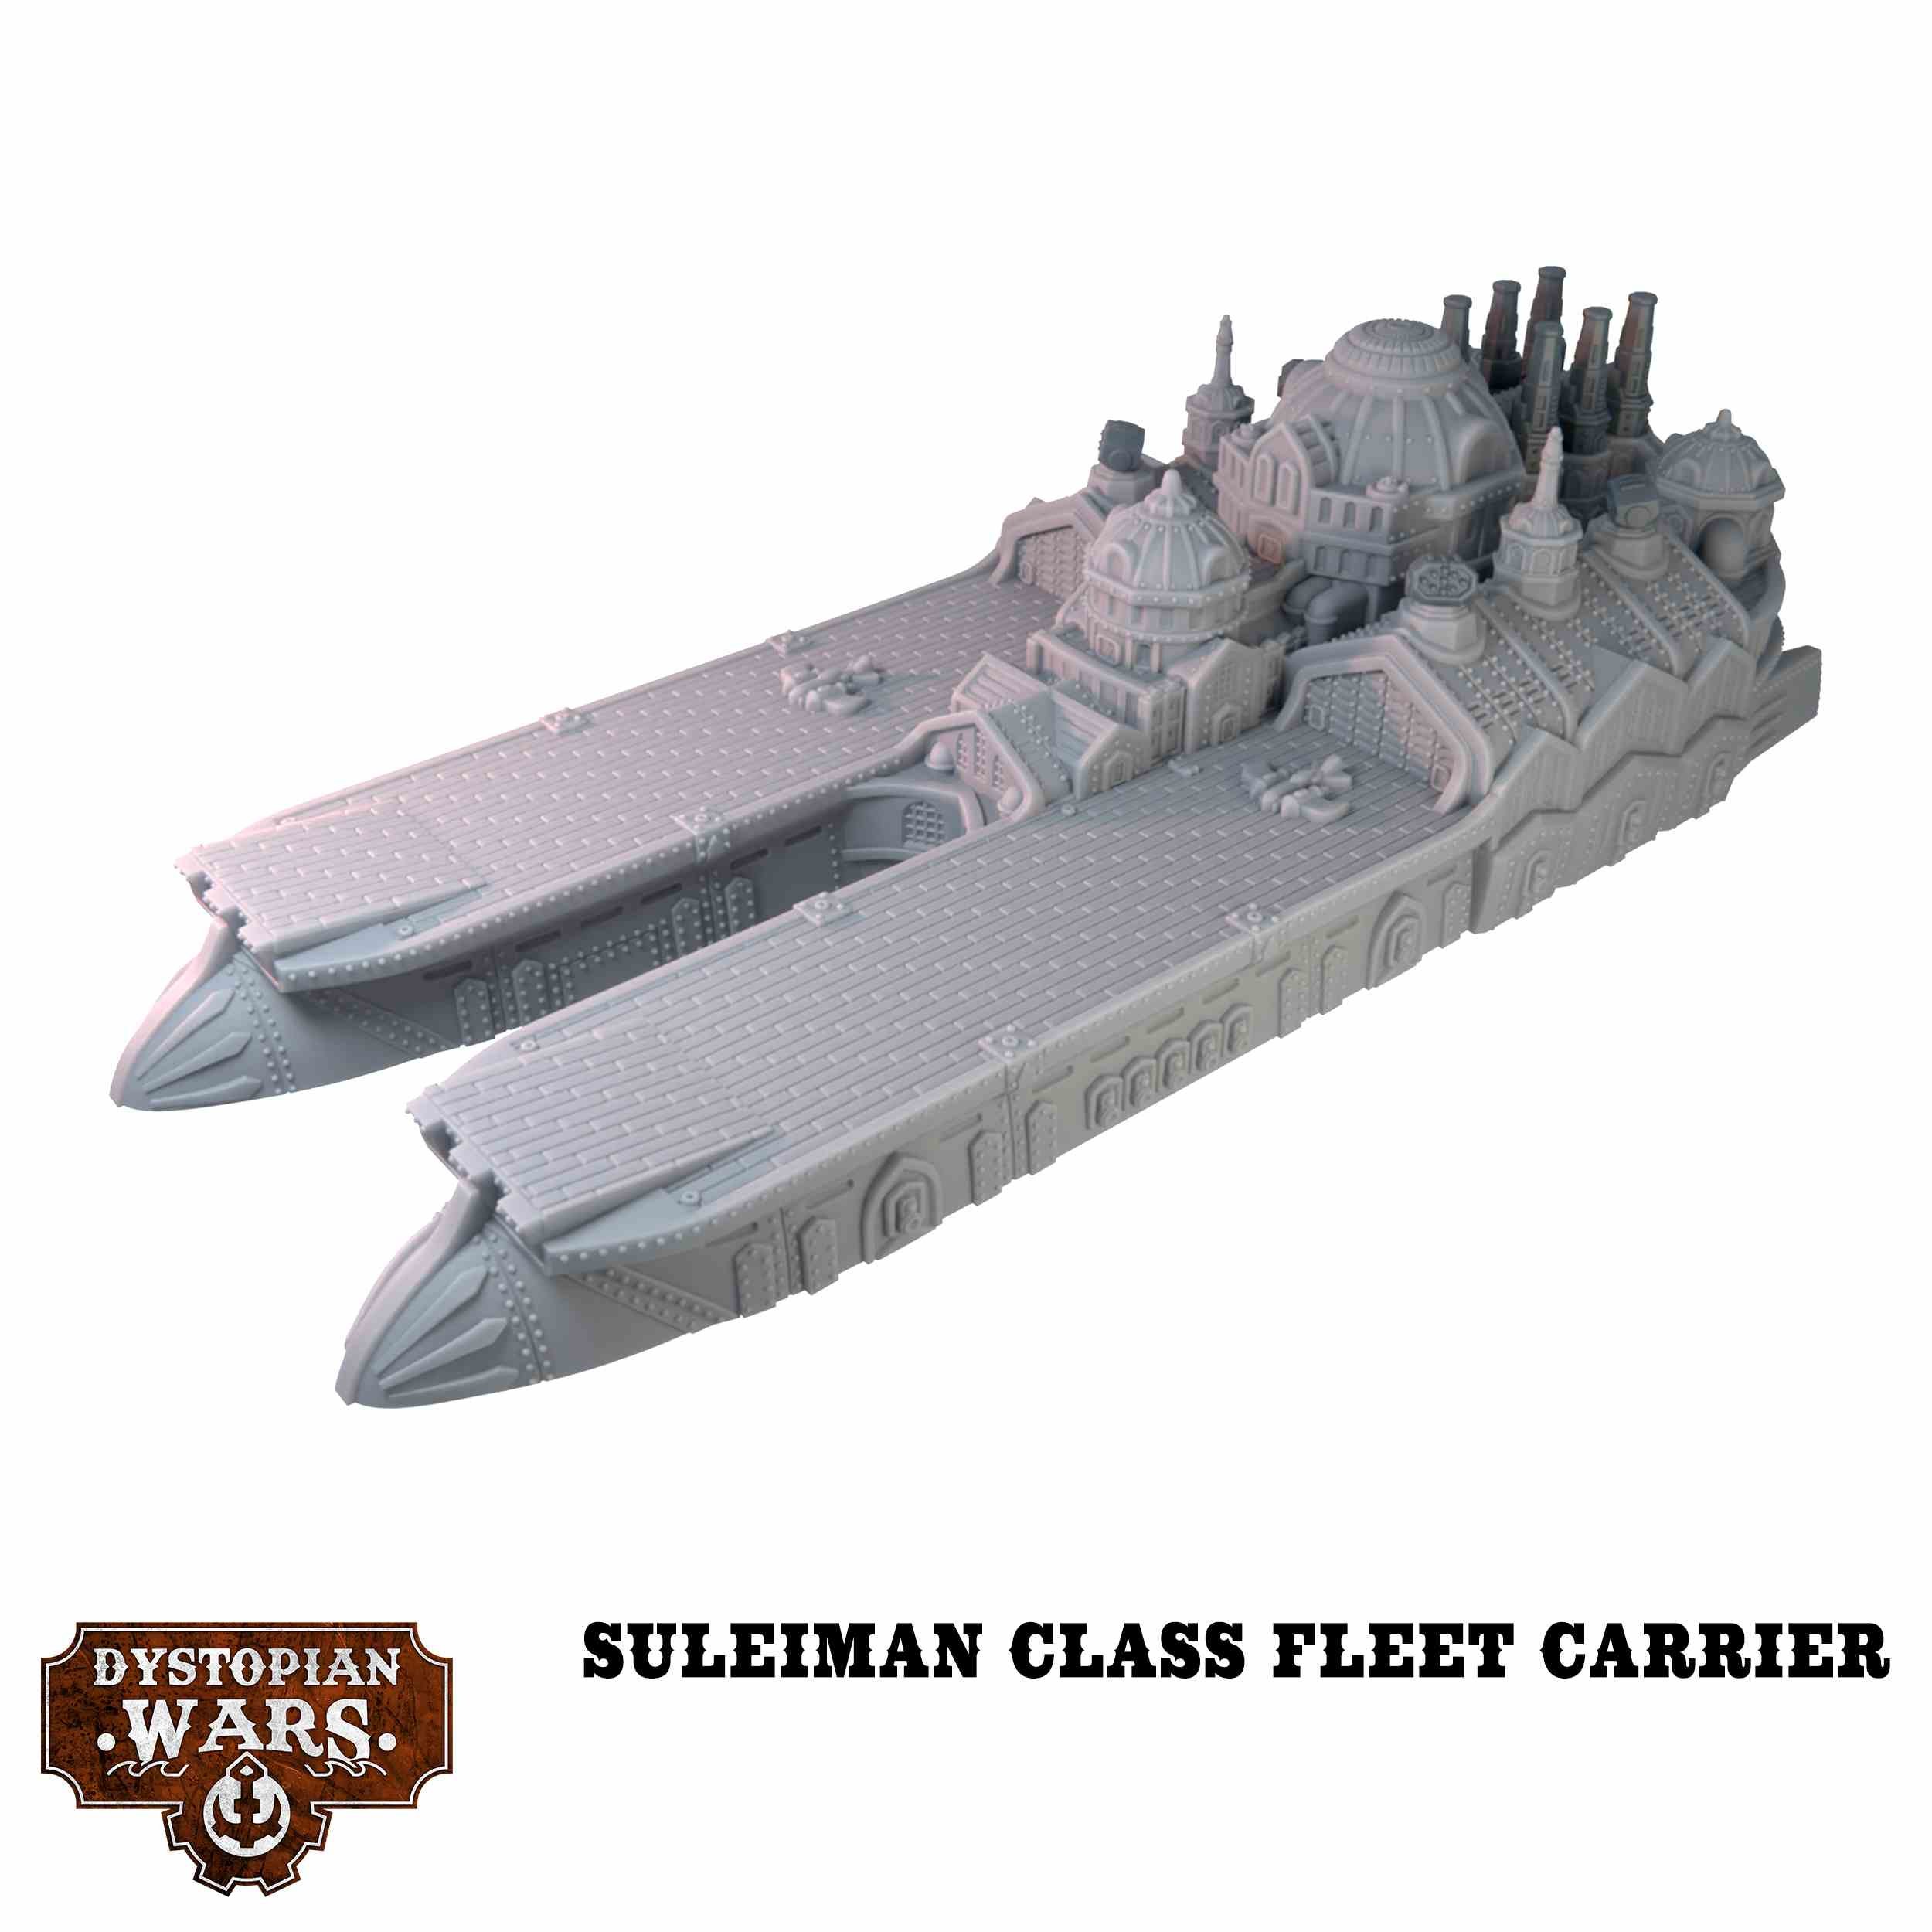 Suleiman Class Fleet Carrier - Dystopian Wars